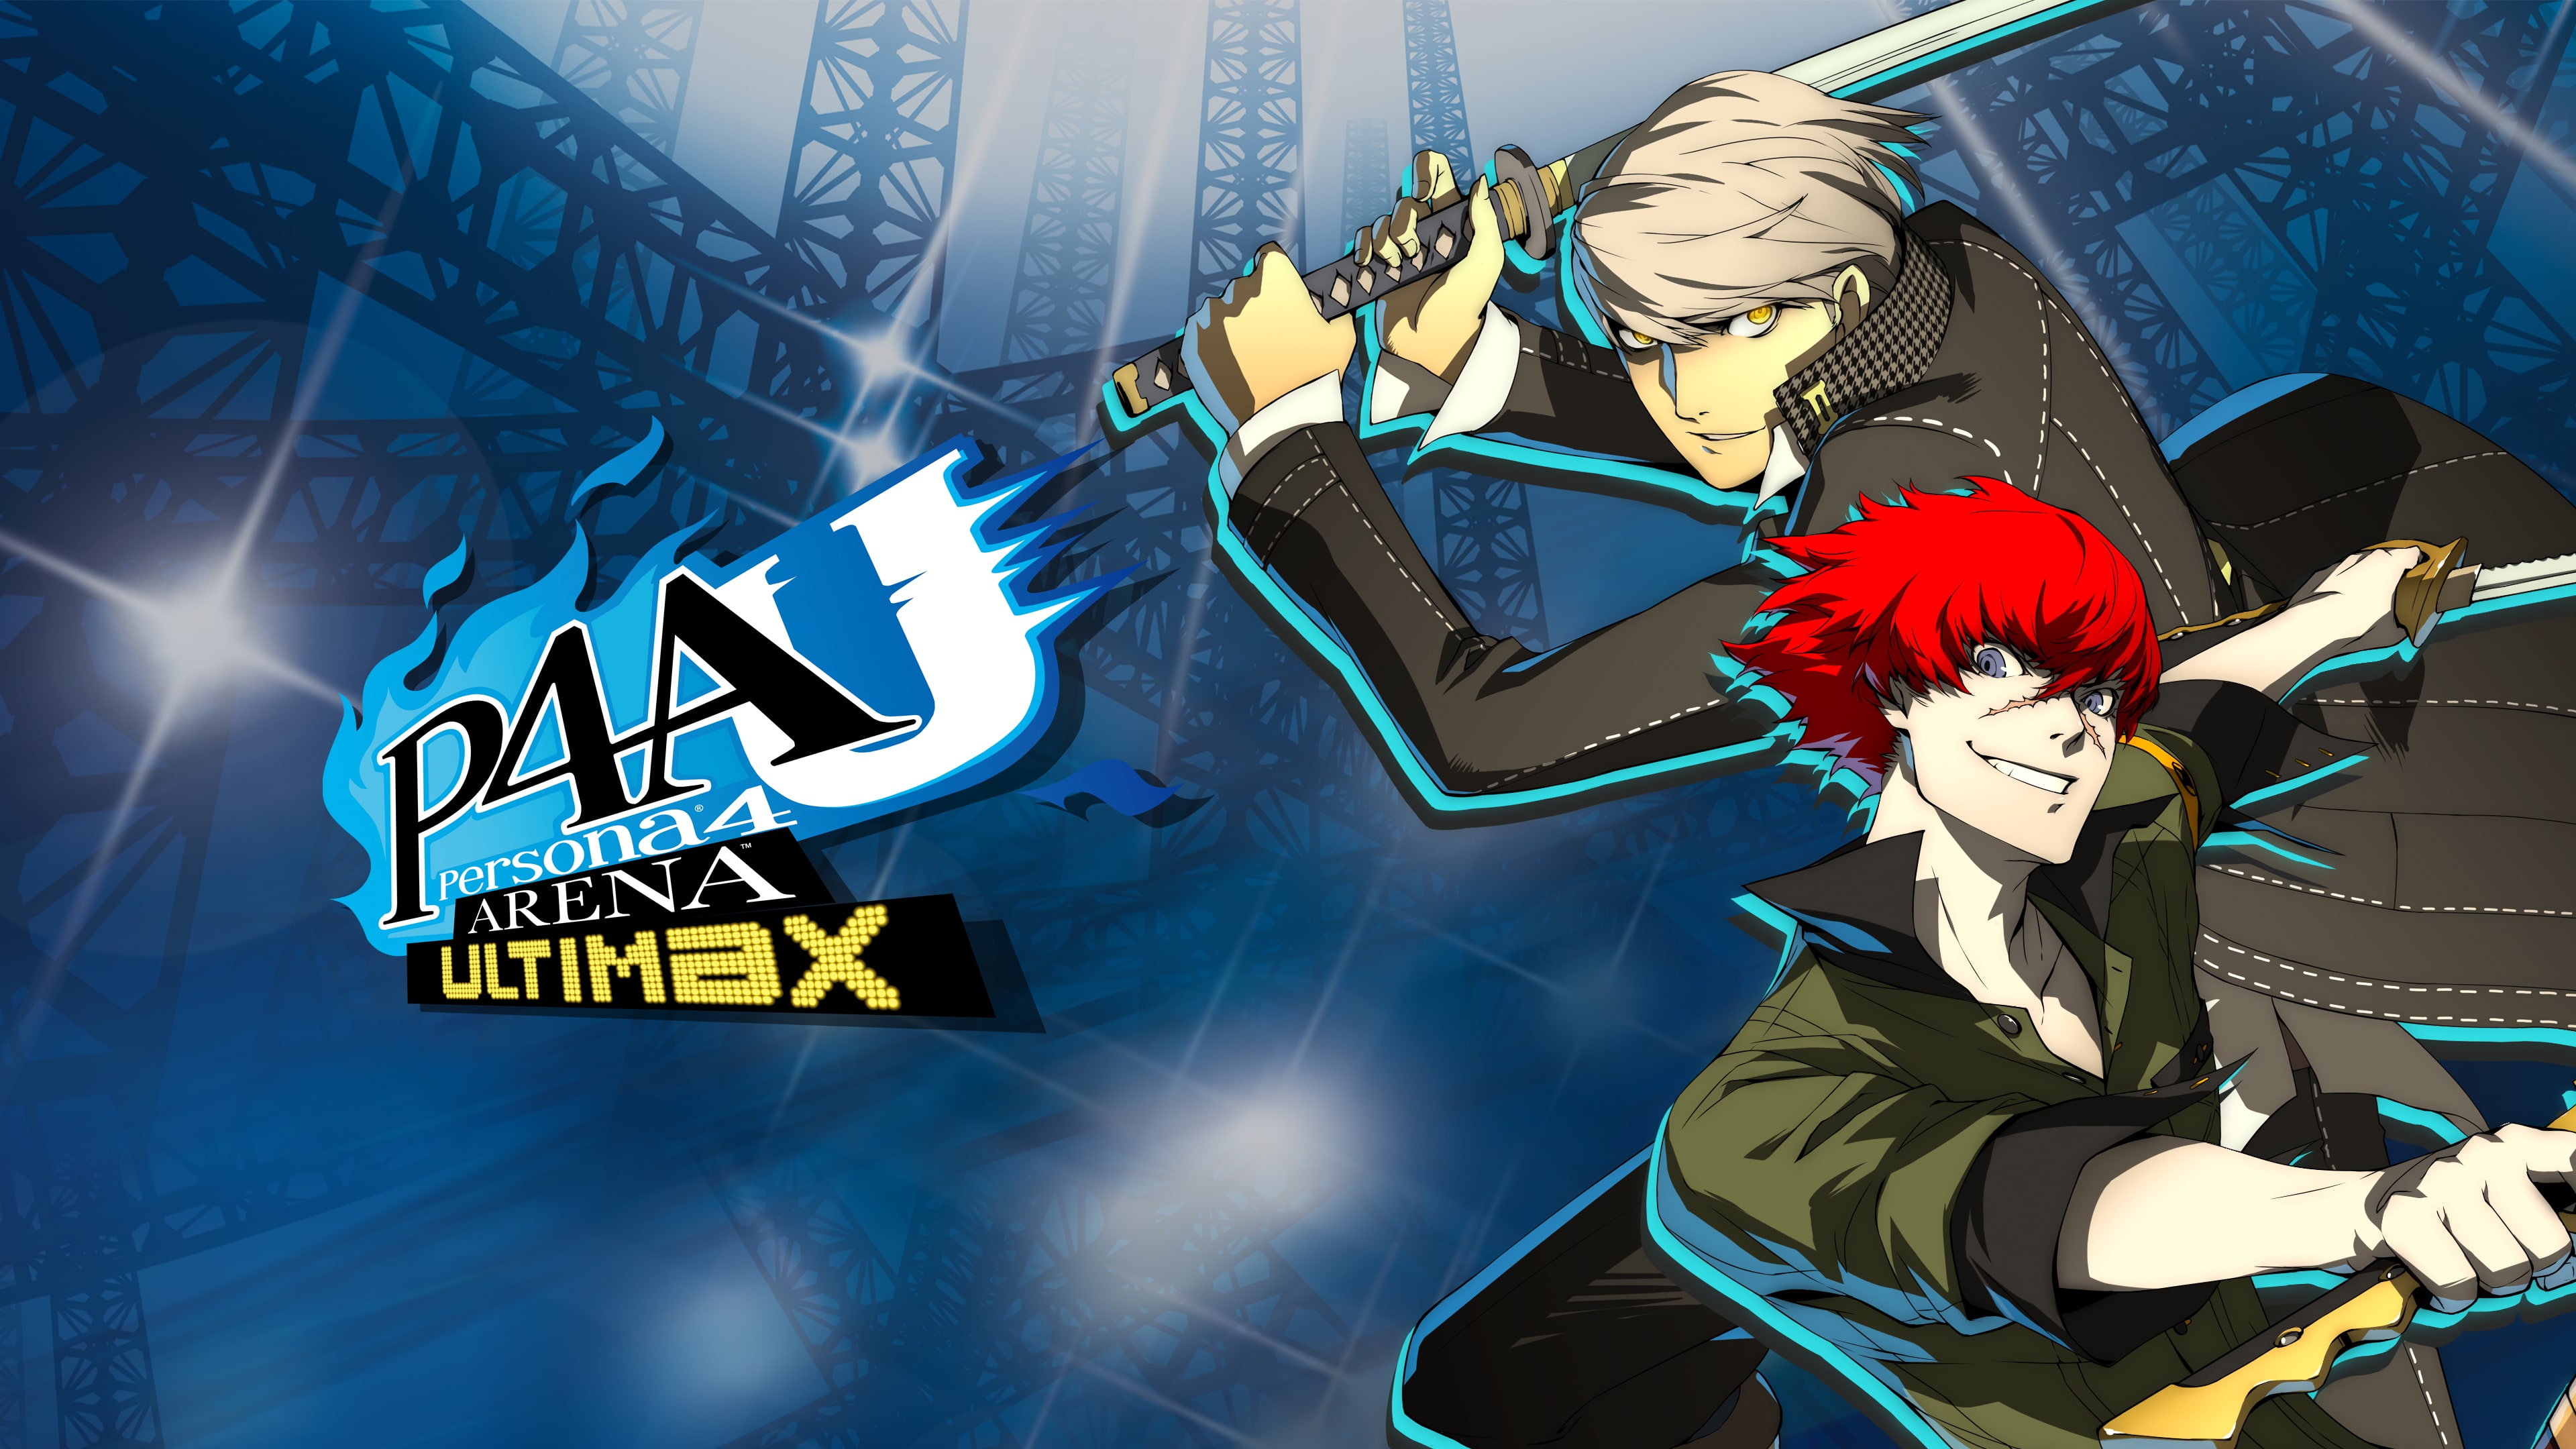 Persona 4 Arena Ultimax (English)